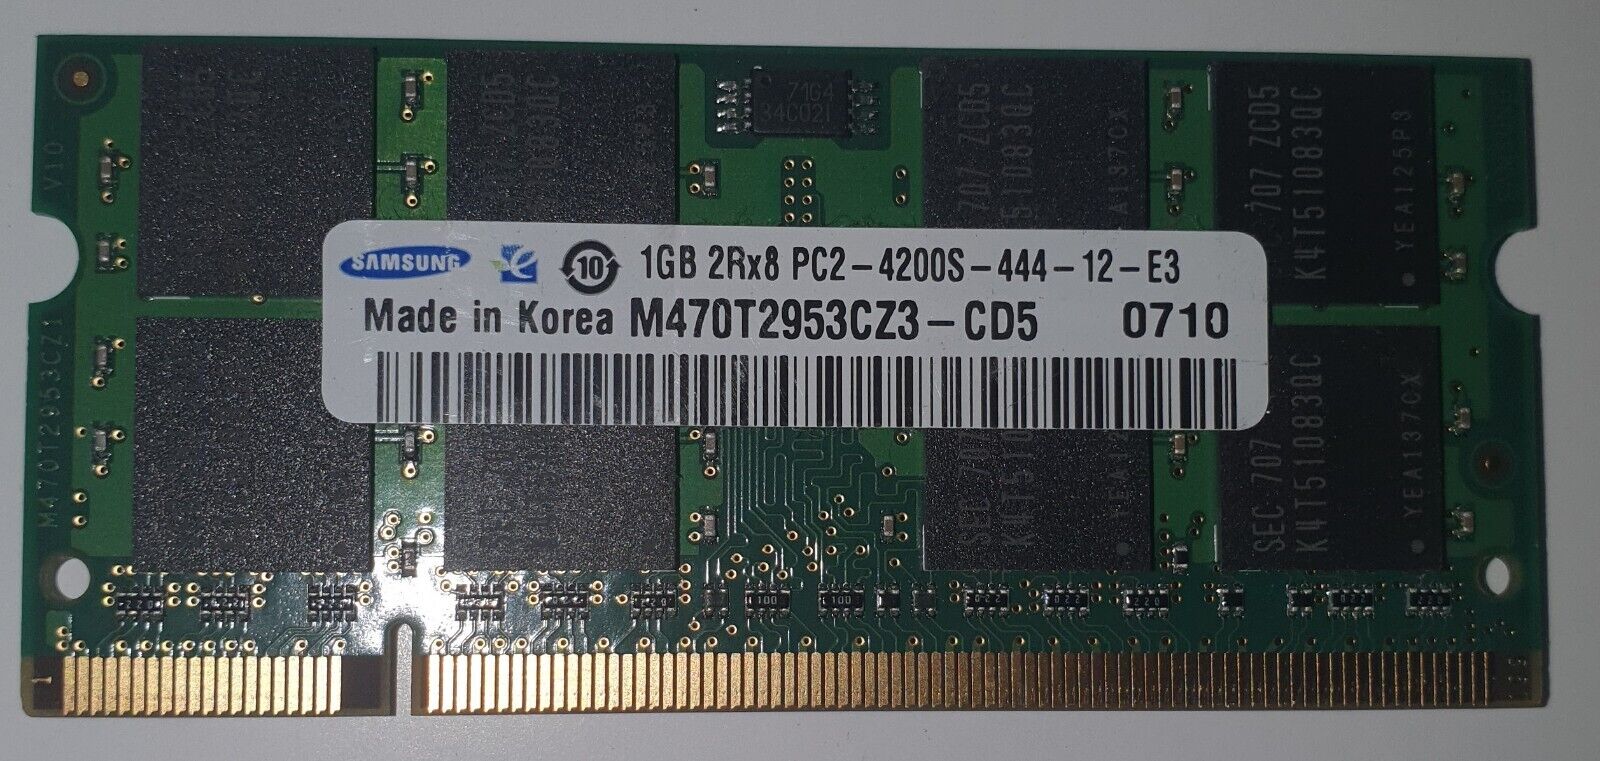 Samsung M470T2953CZ3 1GB 2Rx8 PC2-4200S-444-12-E3 Memory Laptop Qty 16